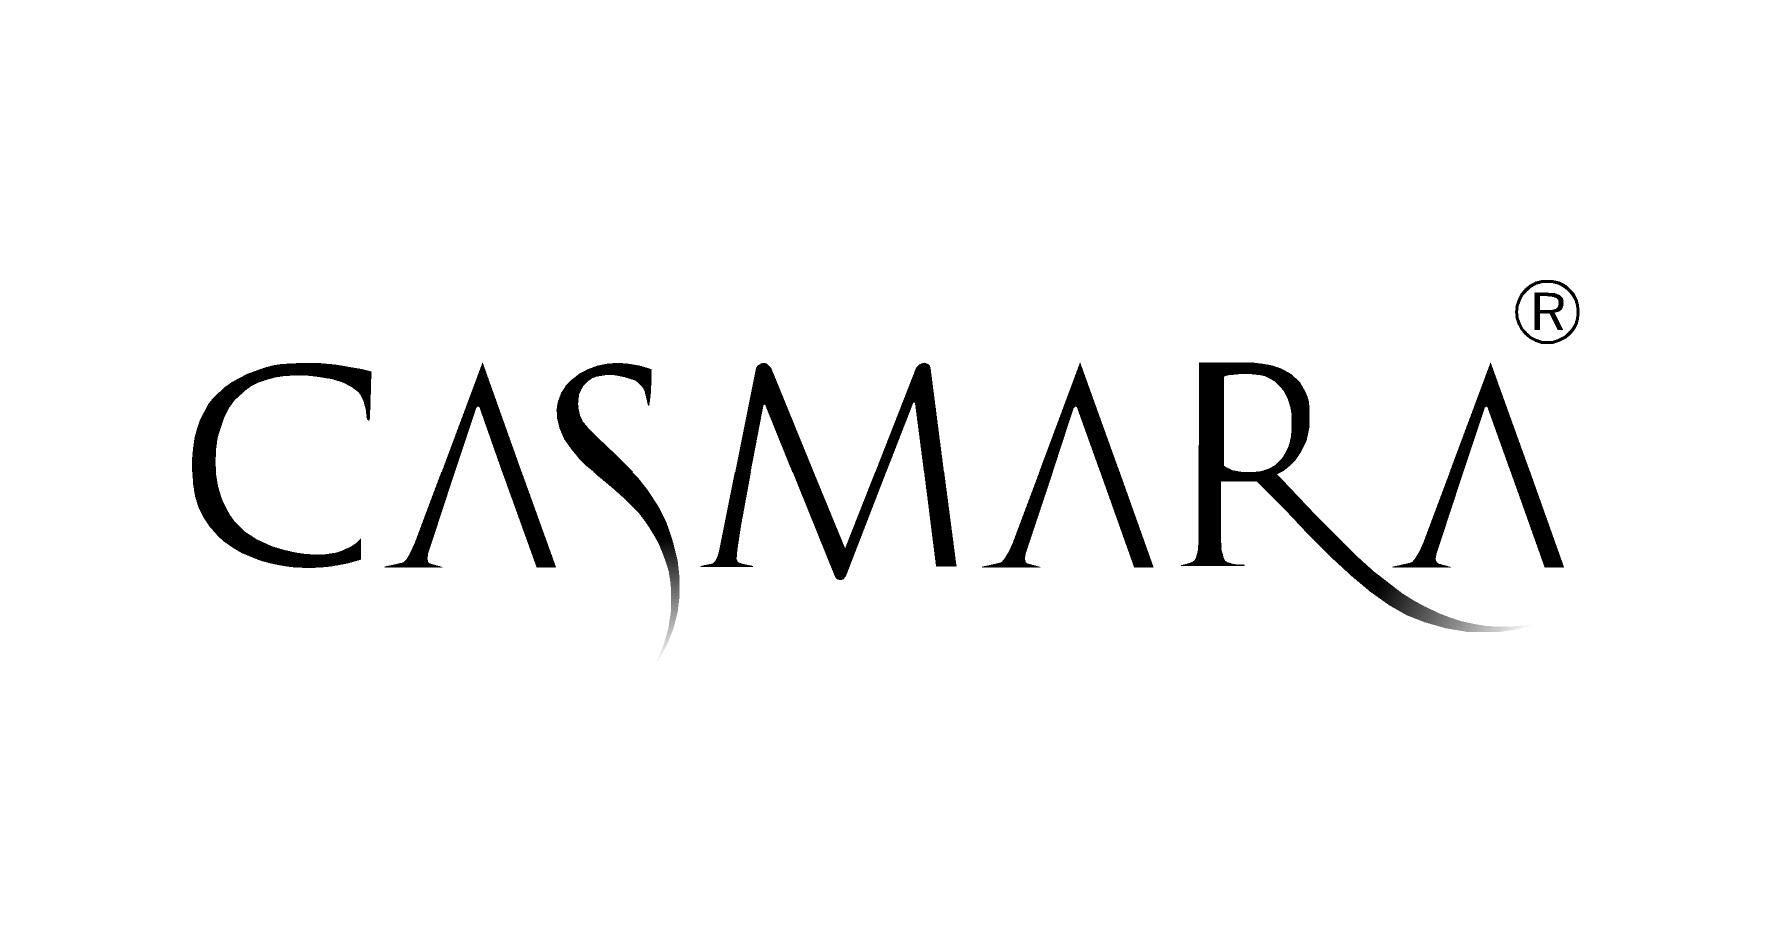 casmara logo